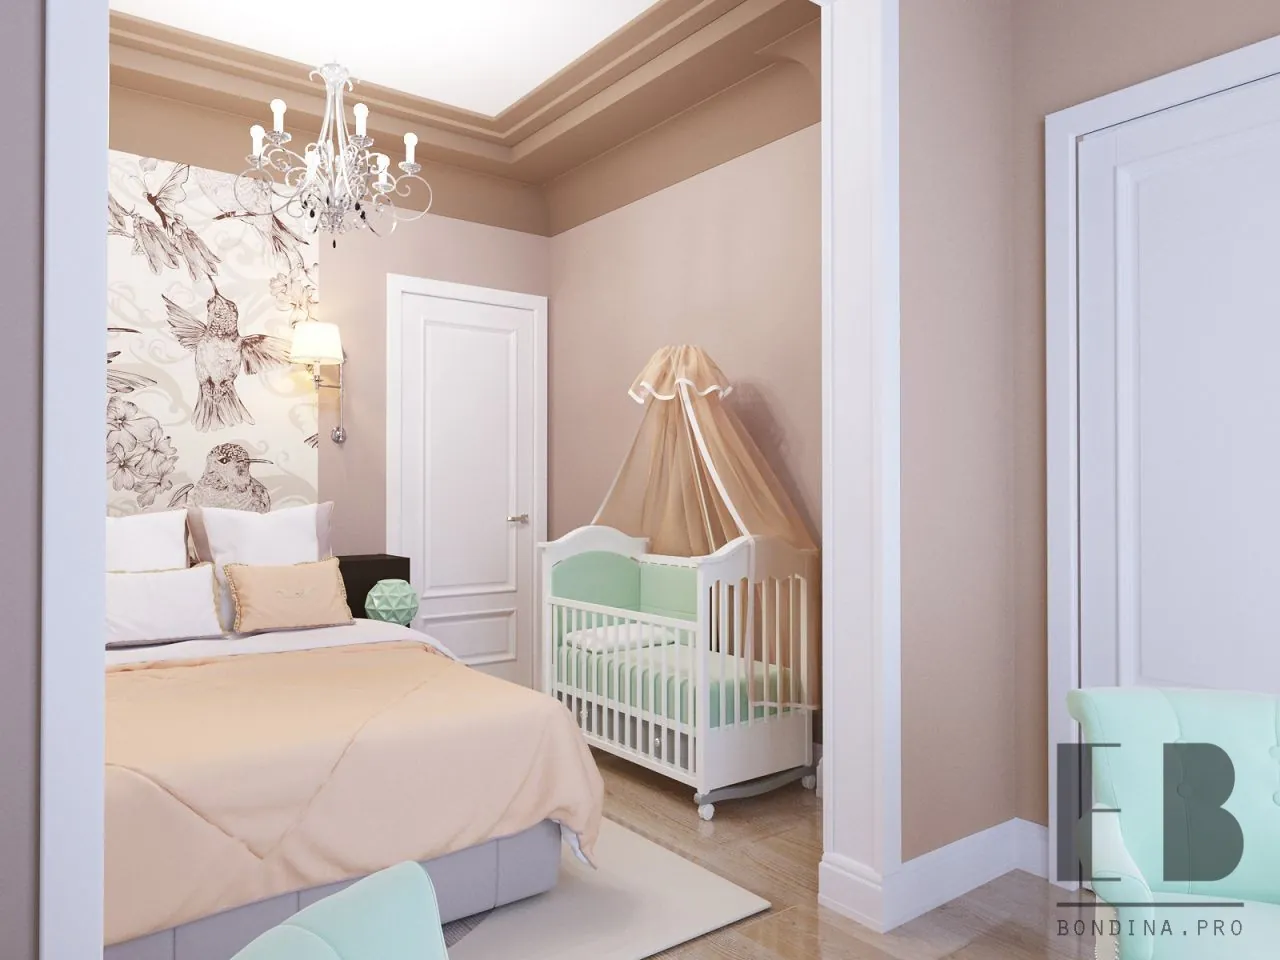 Shared Master Bedroom and Nursery, Interior design